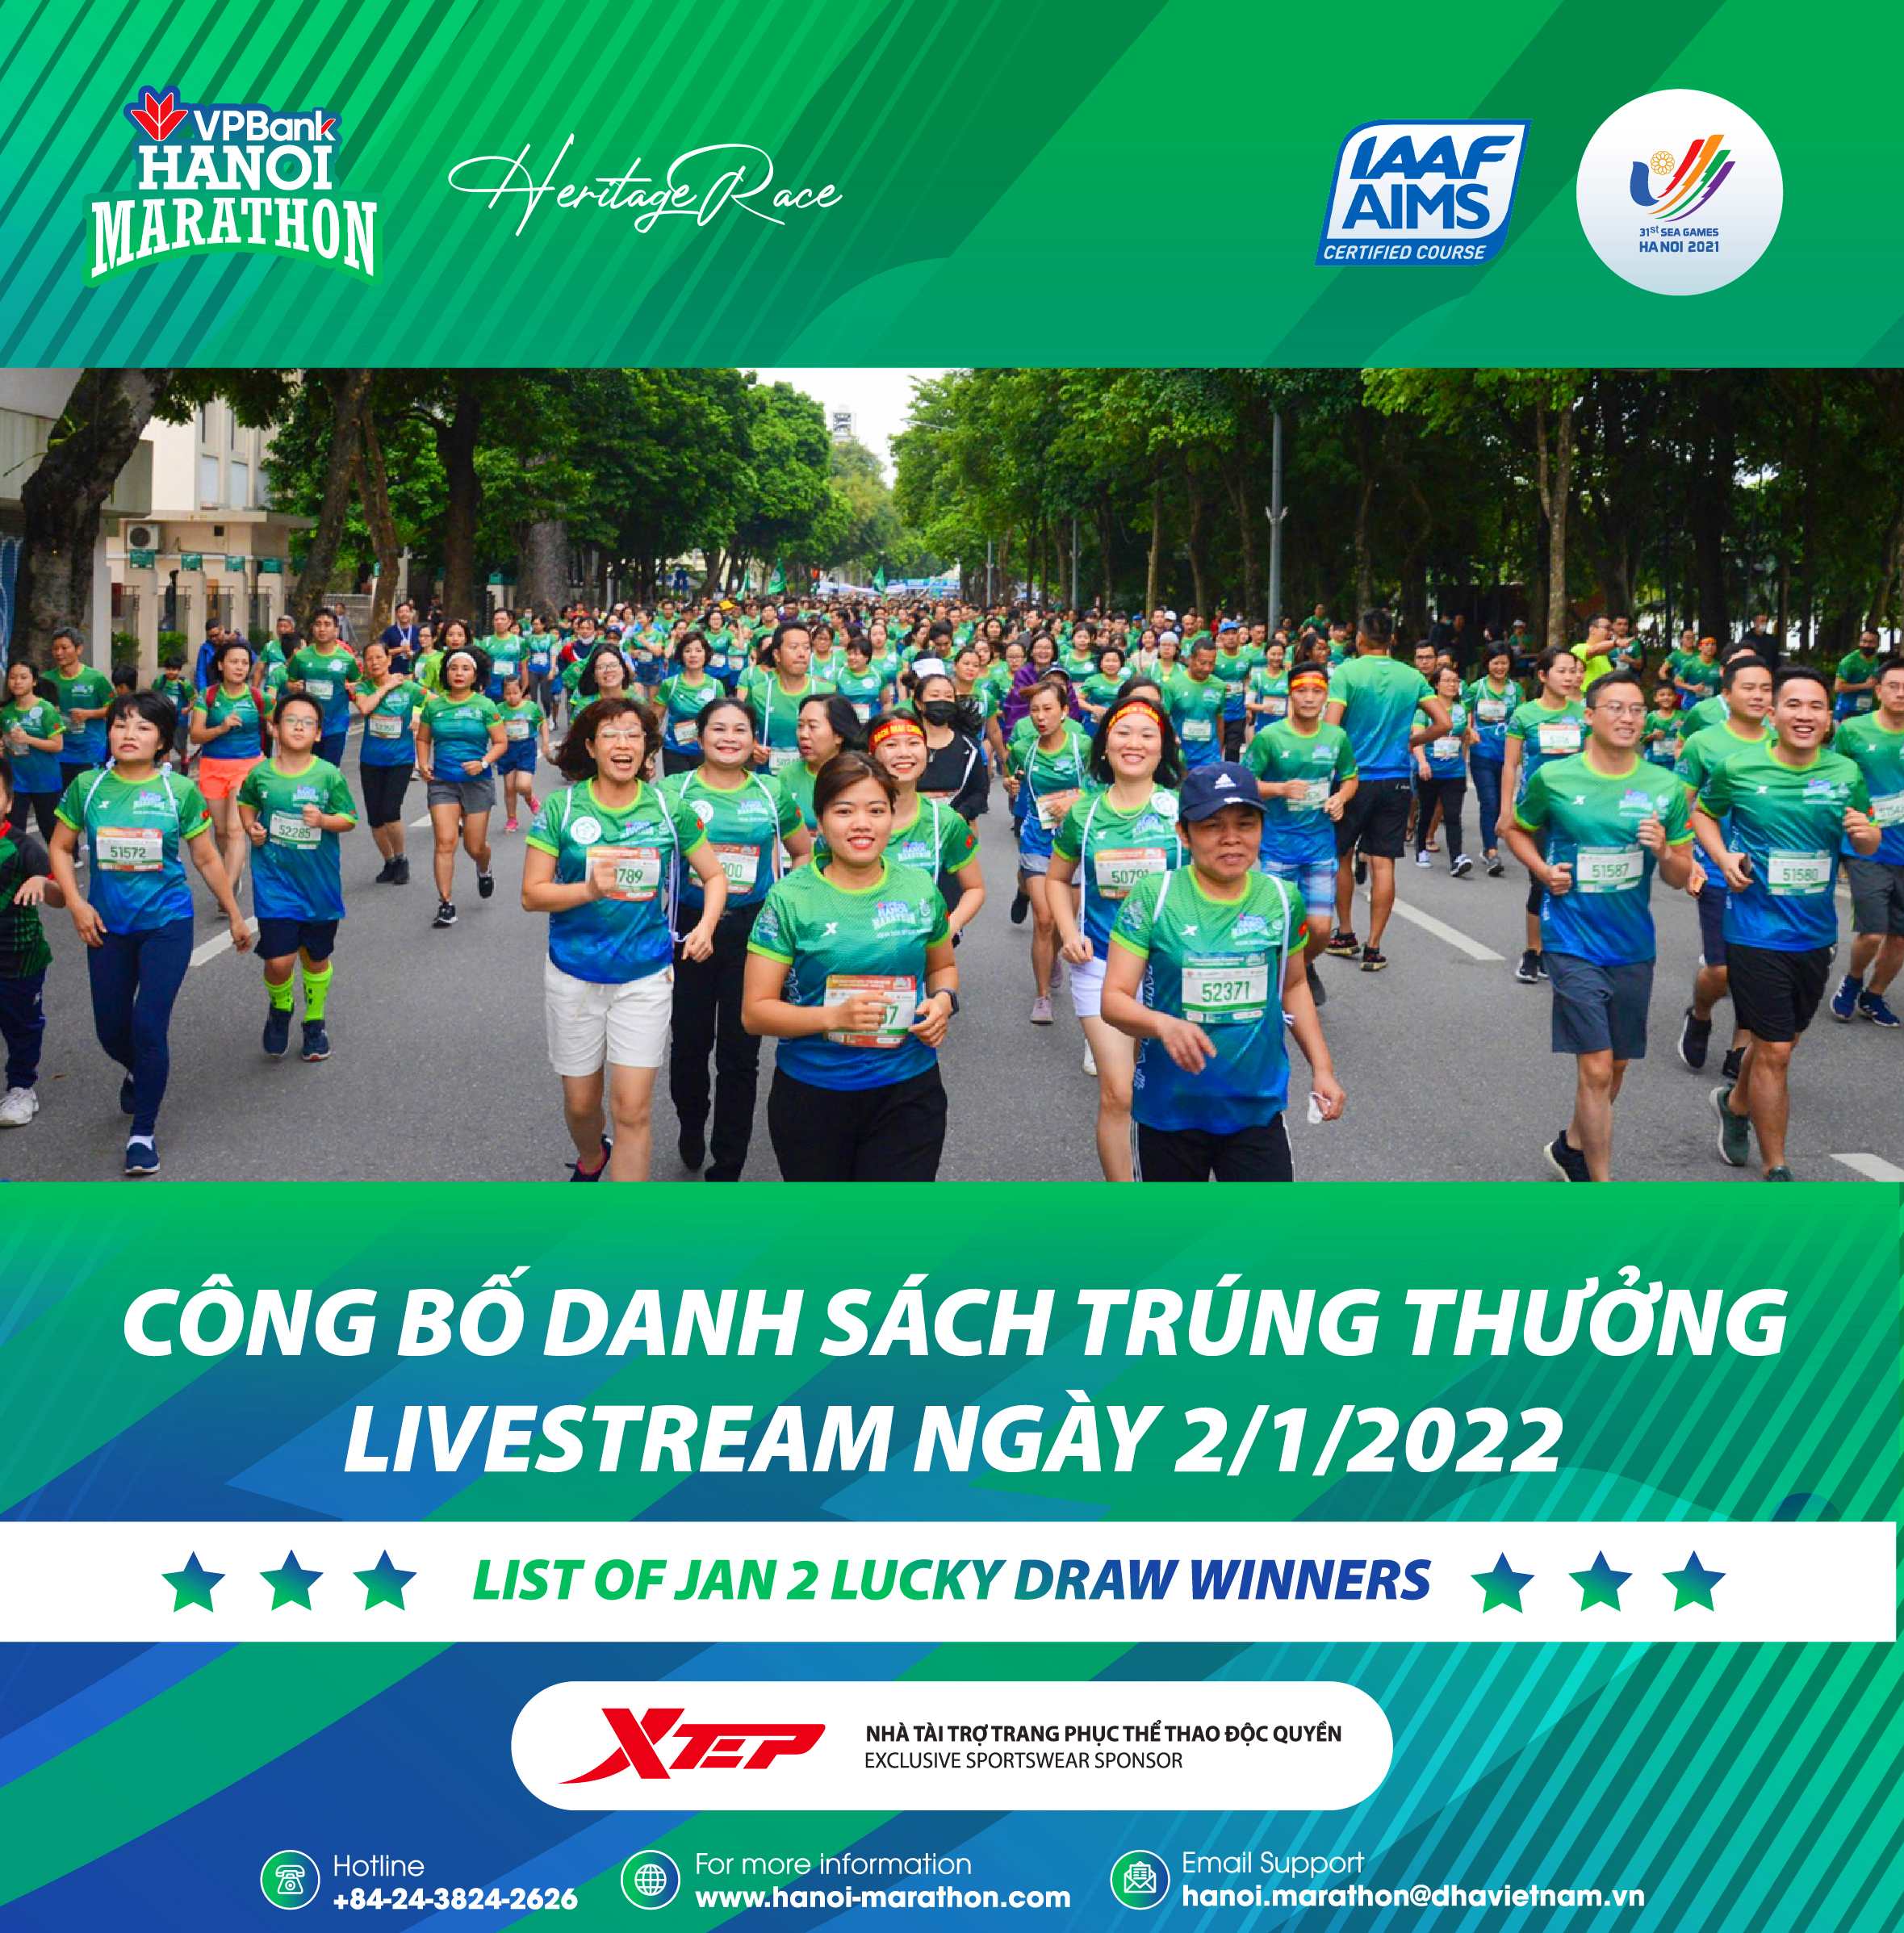 Quang Binh Runners Rise To Top Virtual VPBank Hanoi Marathon